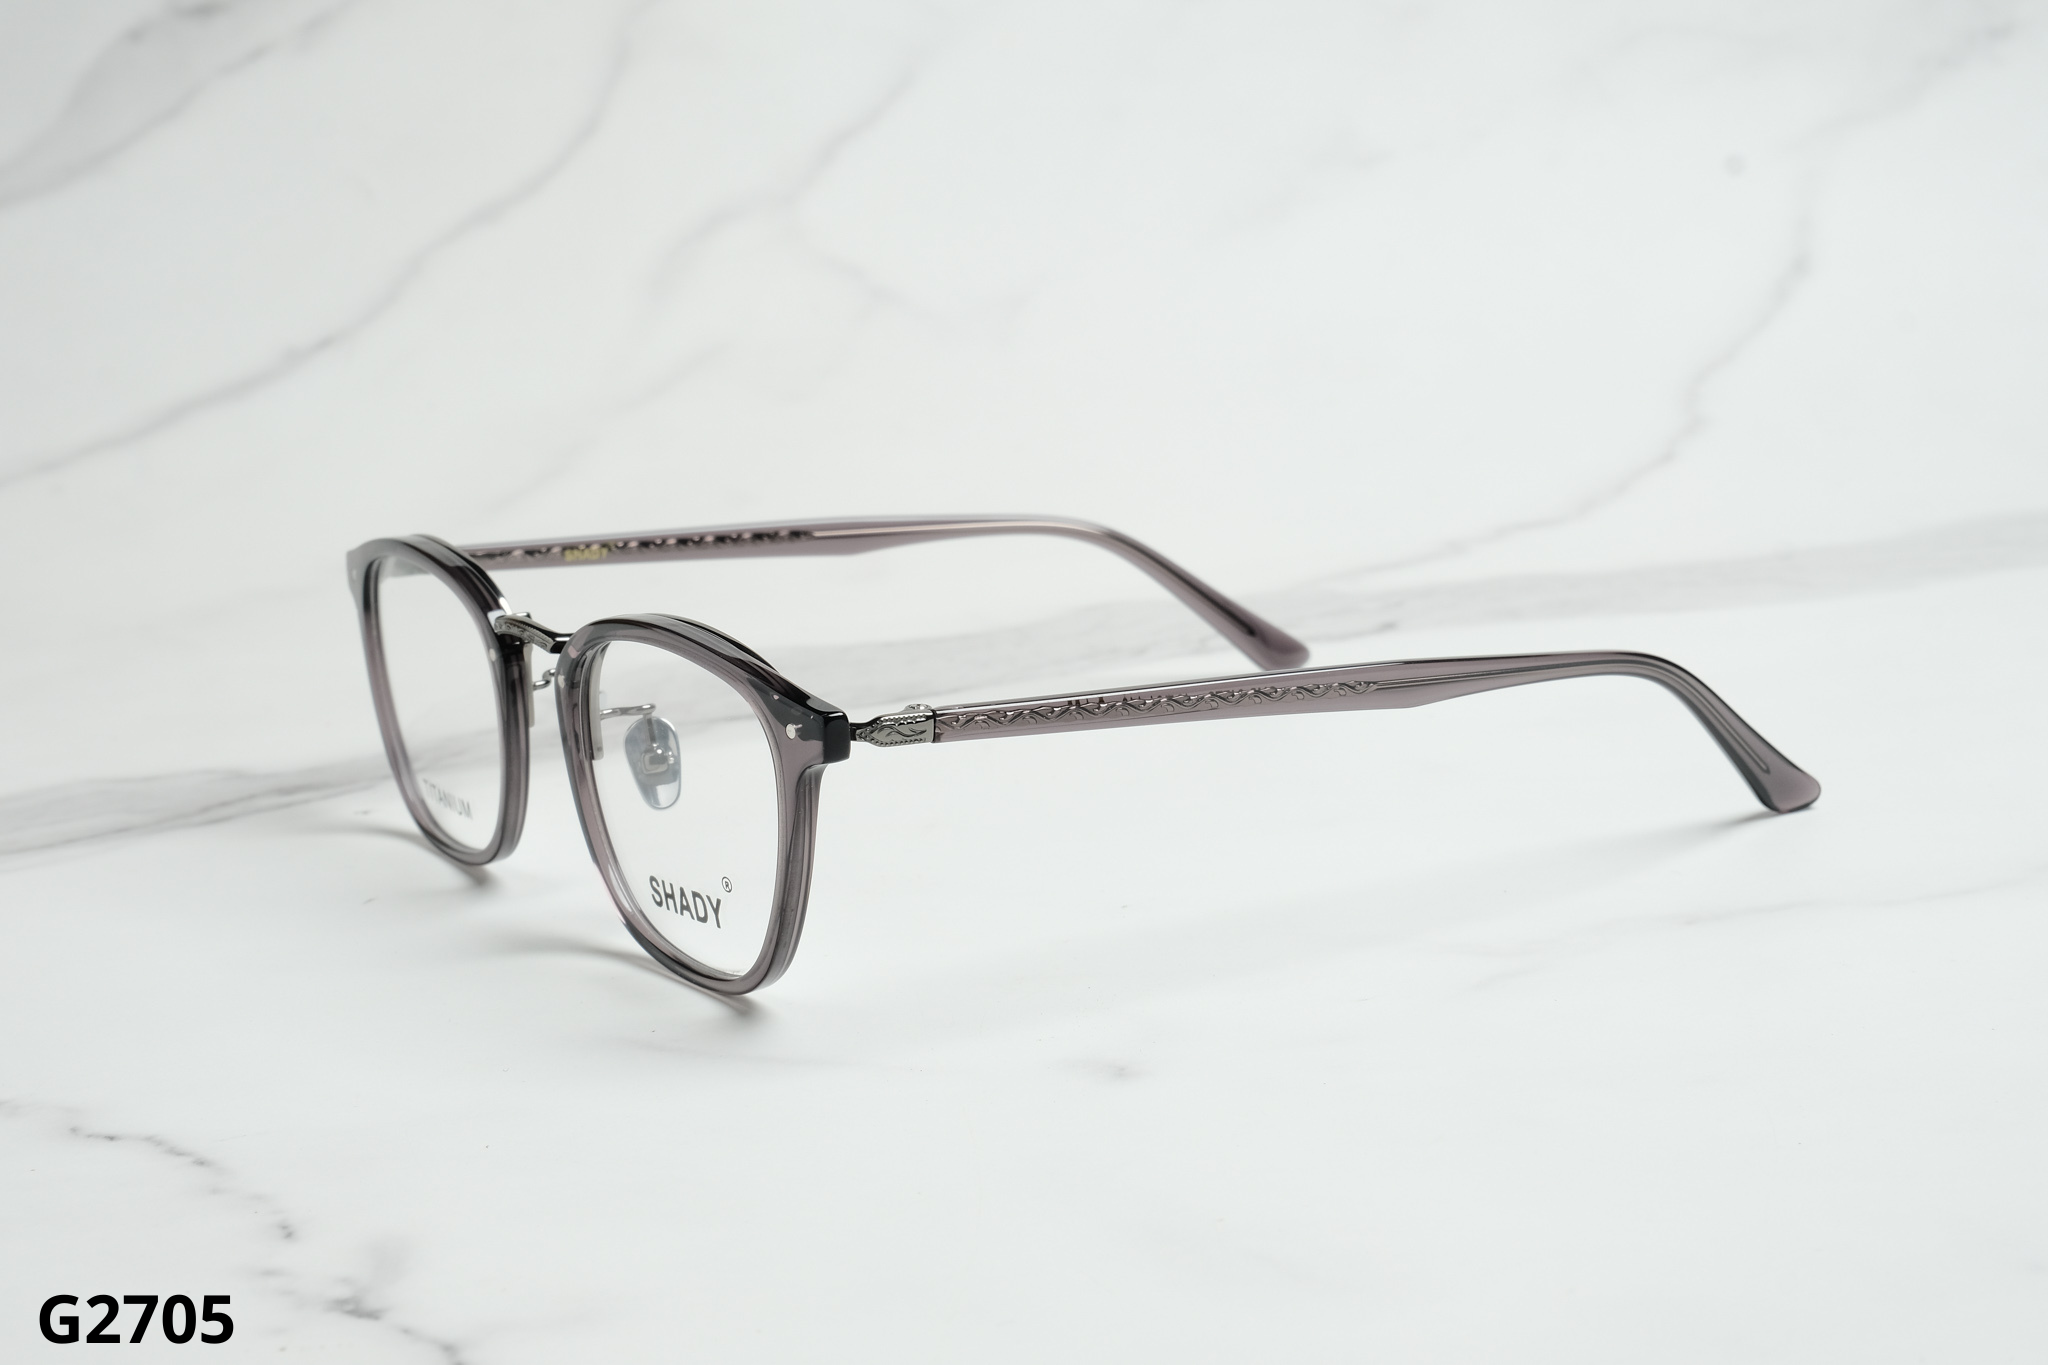  SHADY Eyewear - Glasses - G2705 